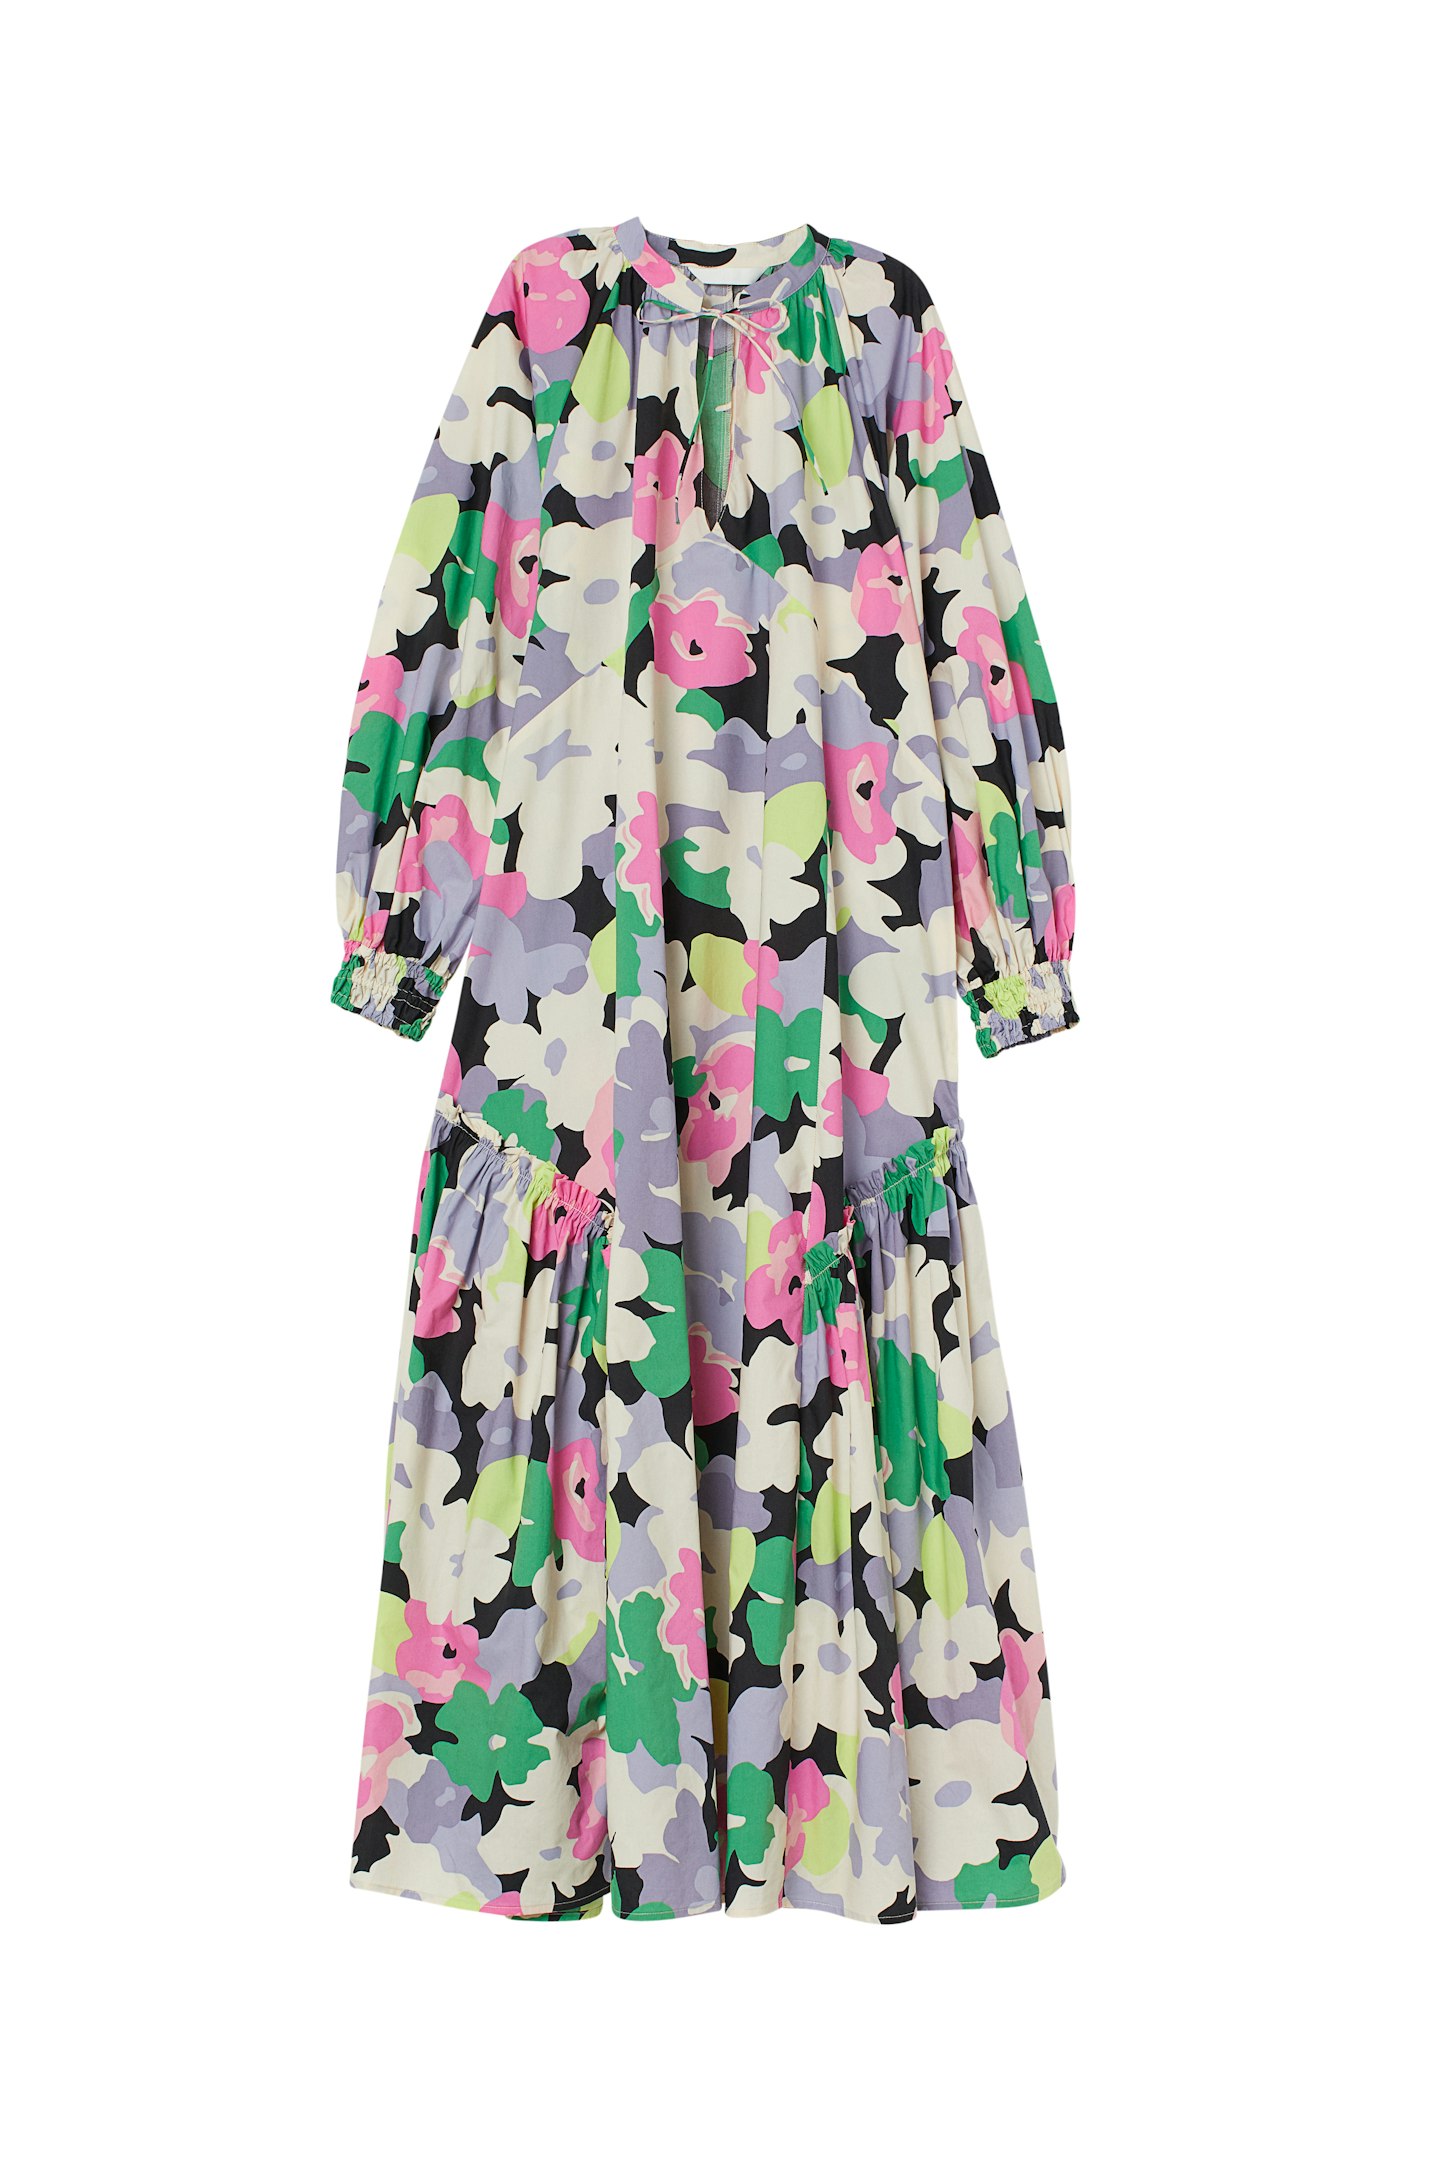 Cotton Kaftan Dress, £34.99